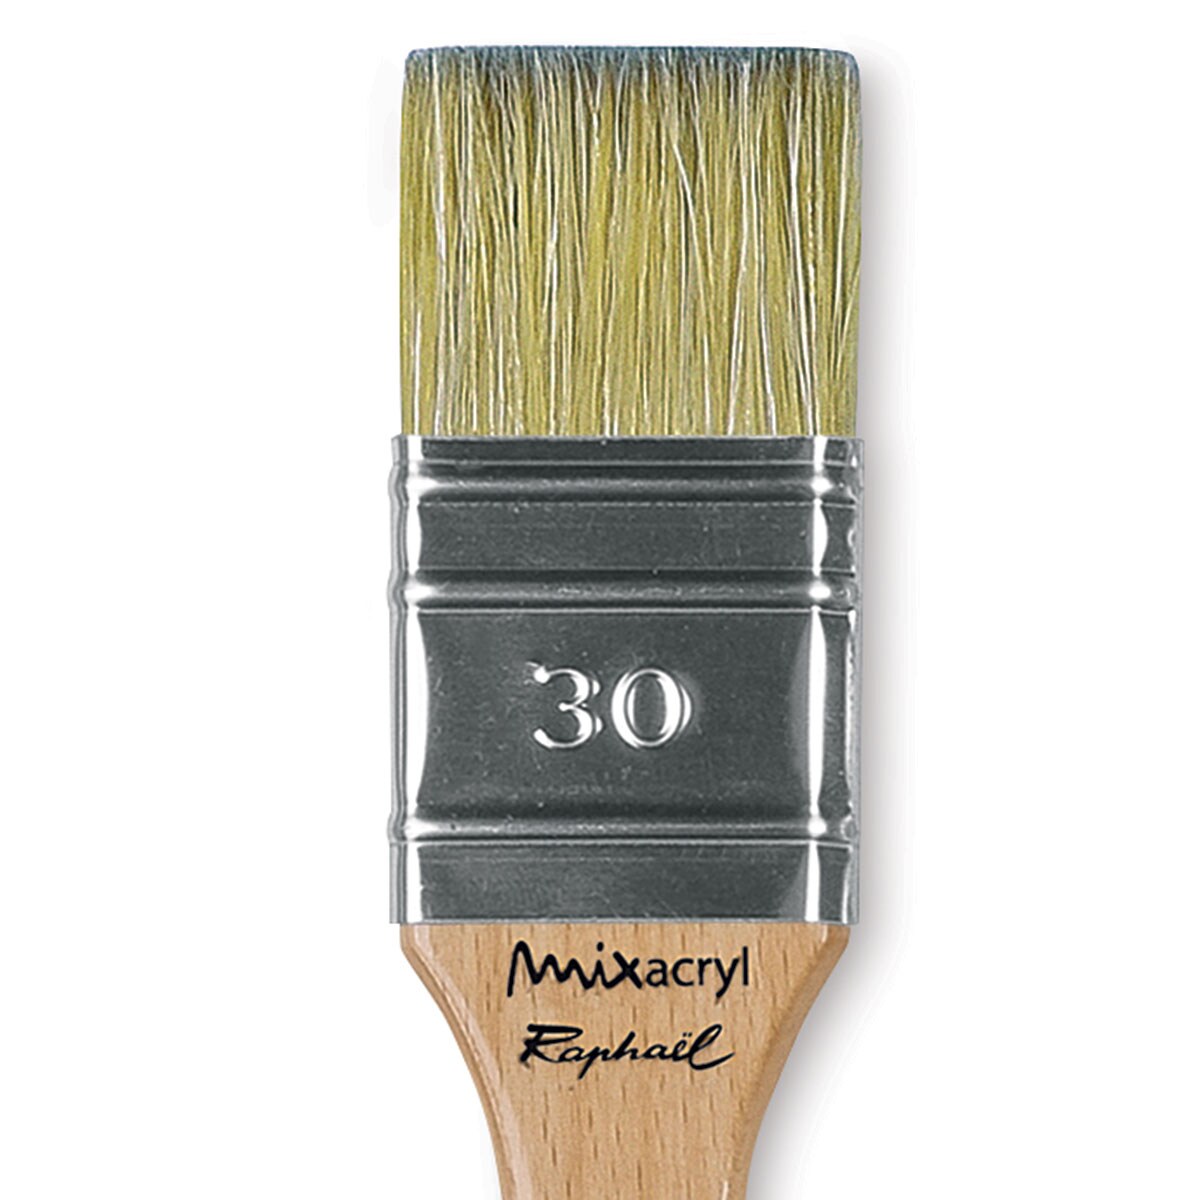 Raphael Mixacryl Natural Bristle/Synthetic Mix Brush - Mixed Media Flat, Size 30